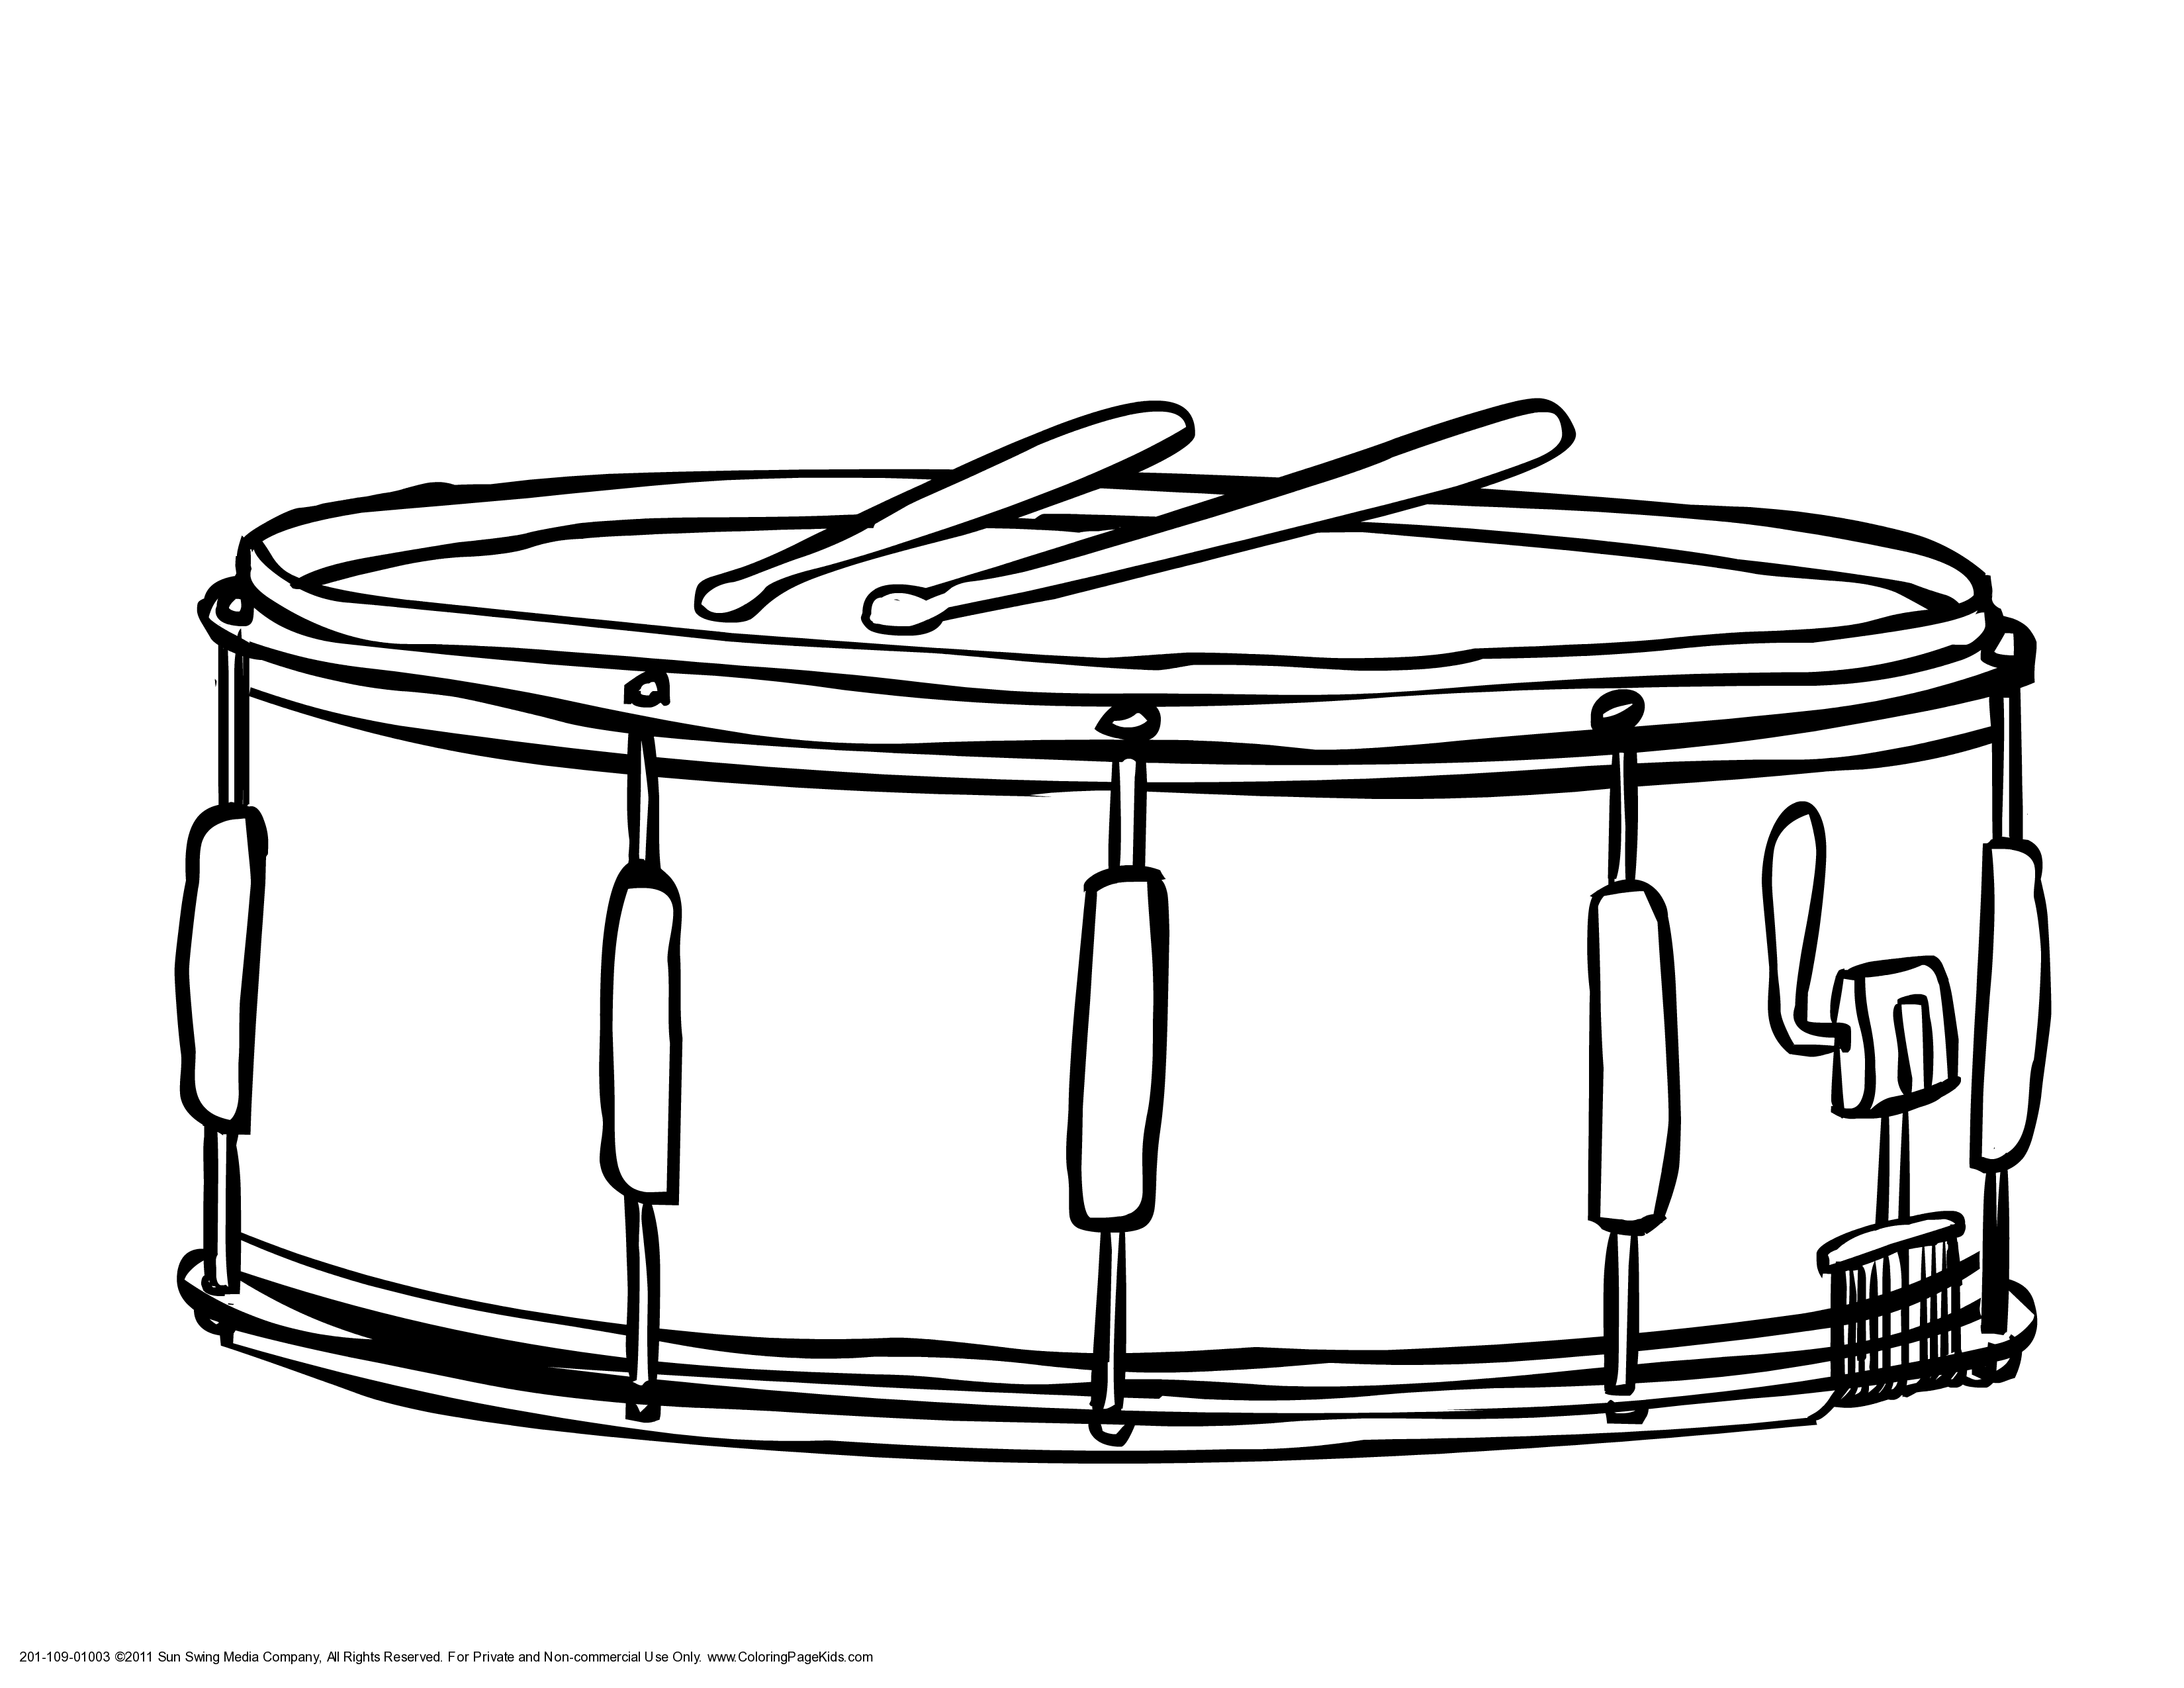 ... Snare drum sketch - Doodl